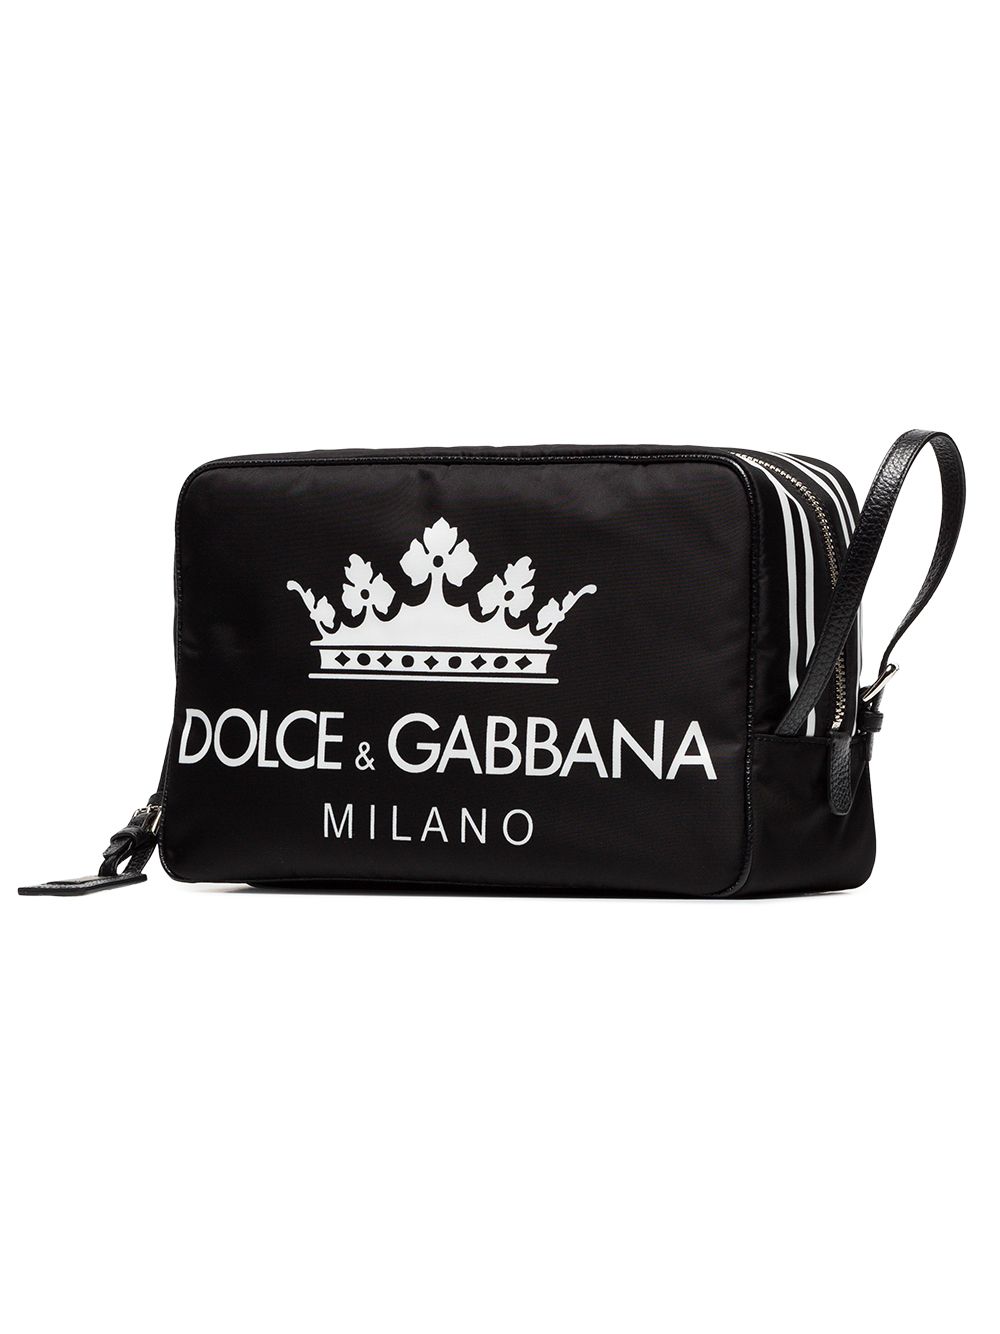 фото Dolce & Gabbana косметичка с логотипом